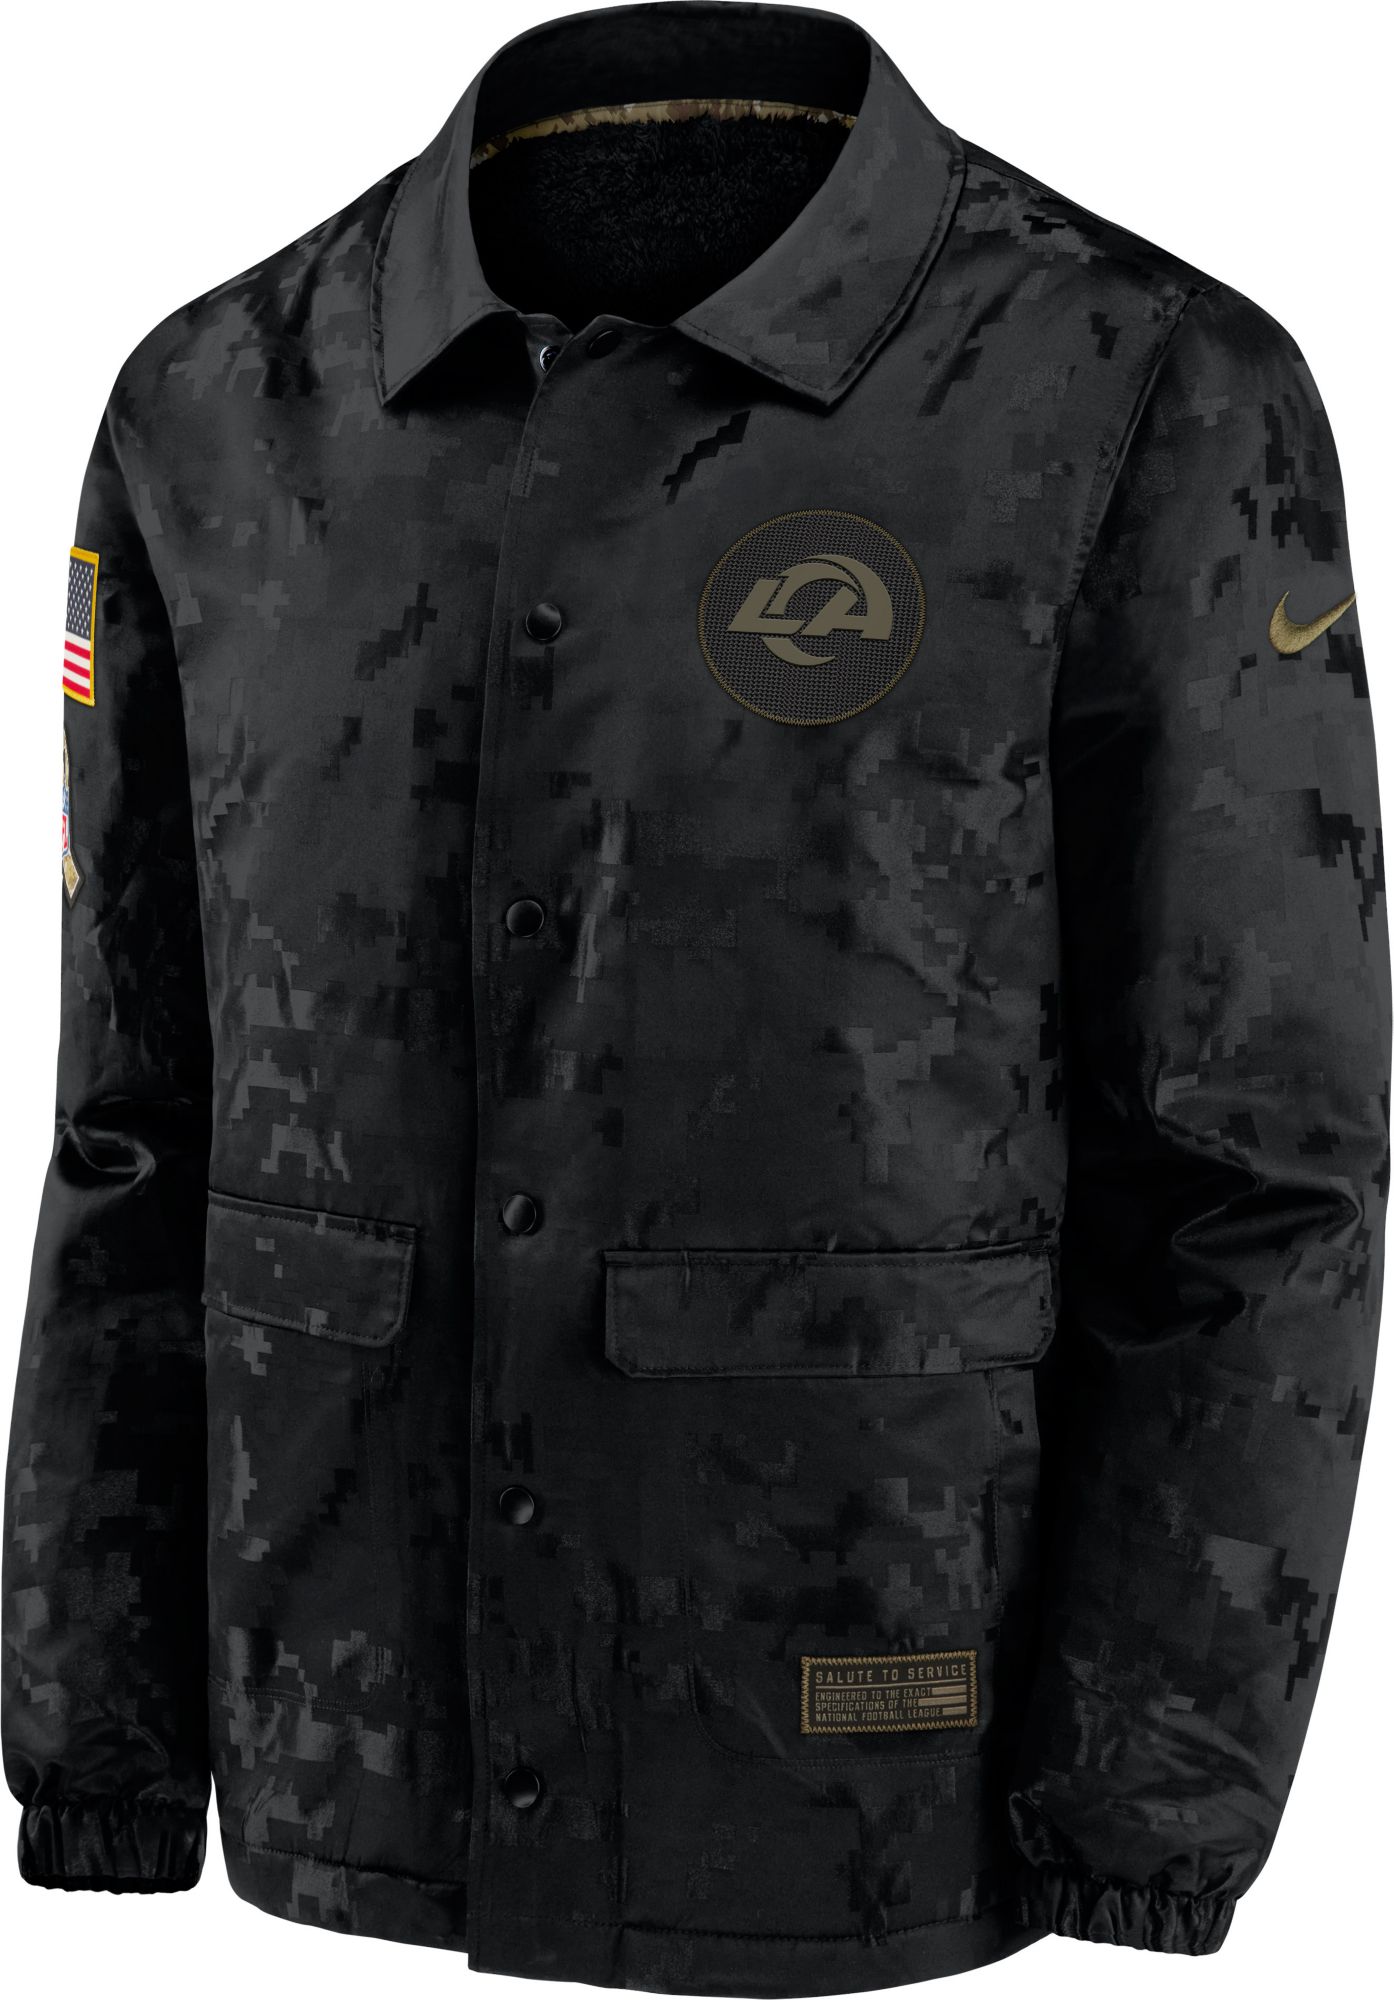 c9 champion men's waterproof breathable jacket